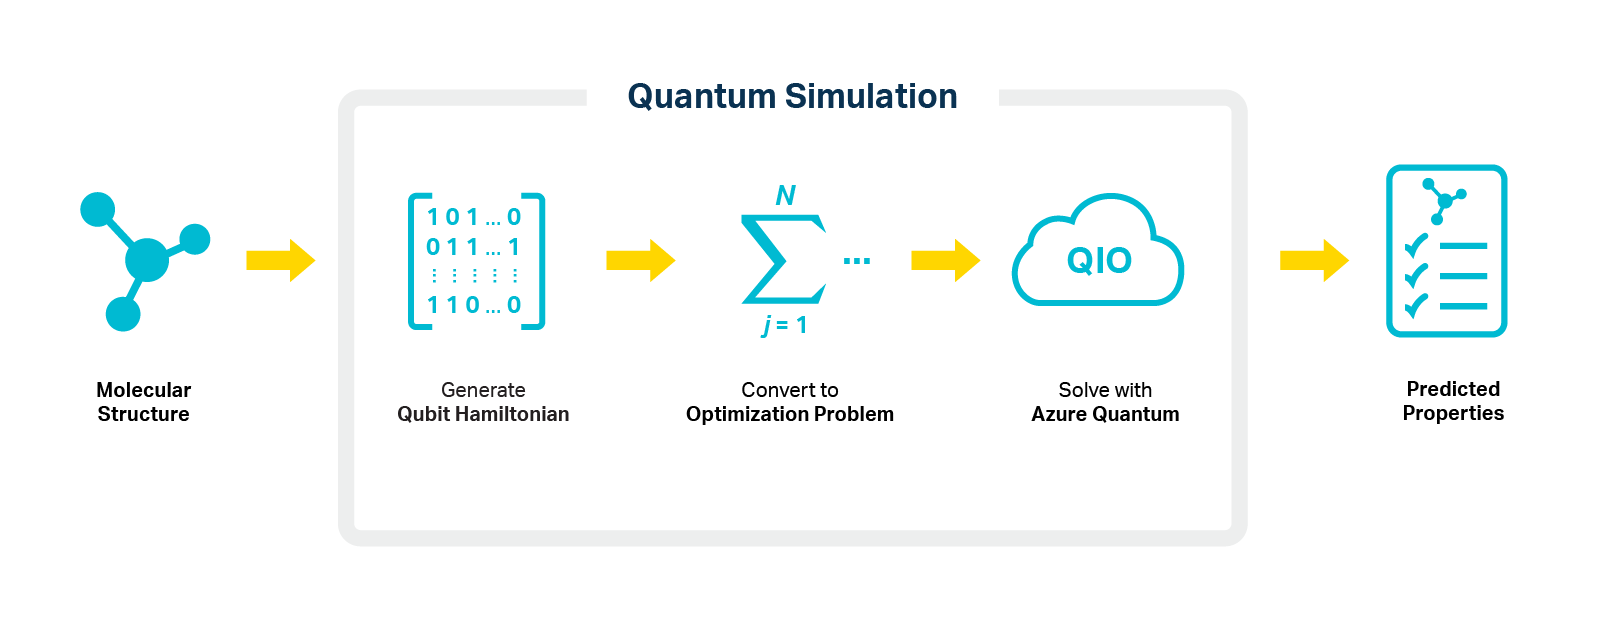 Computational chemistry simulation using OTI Lumionics quantum methods and Microsoft QIO